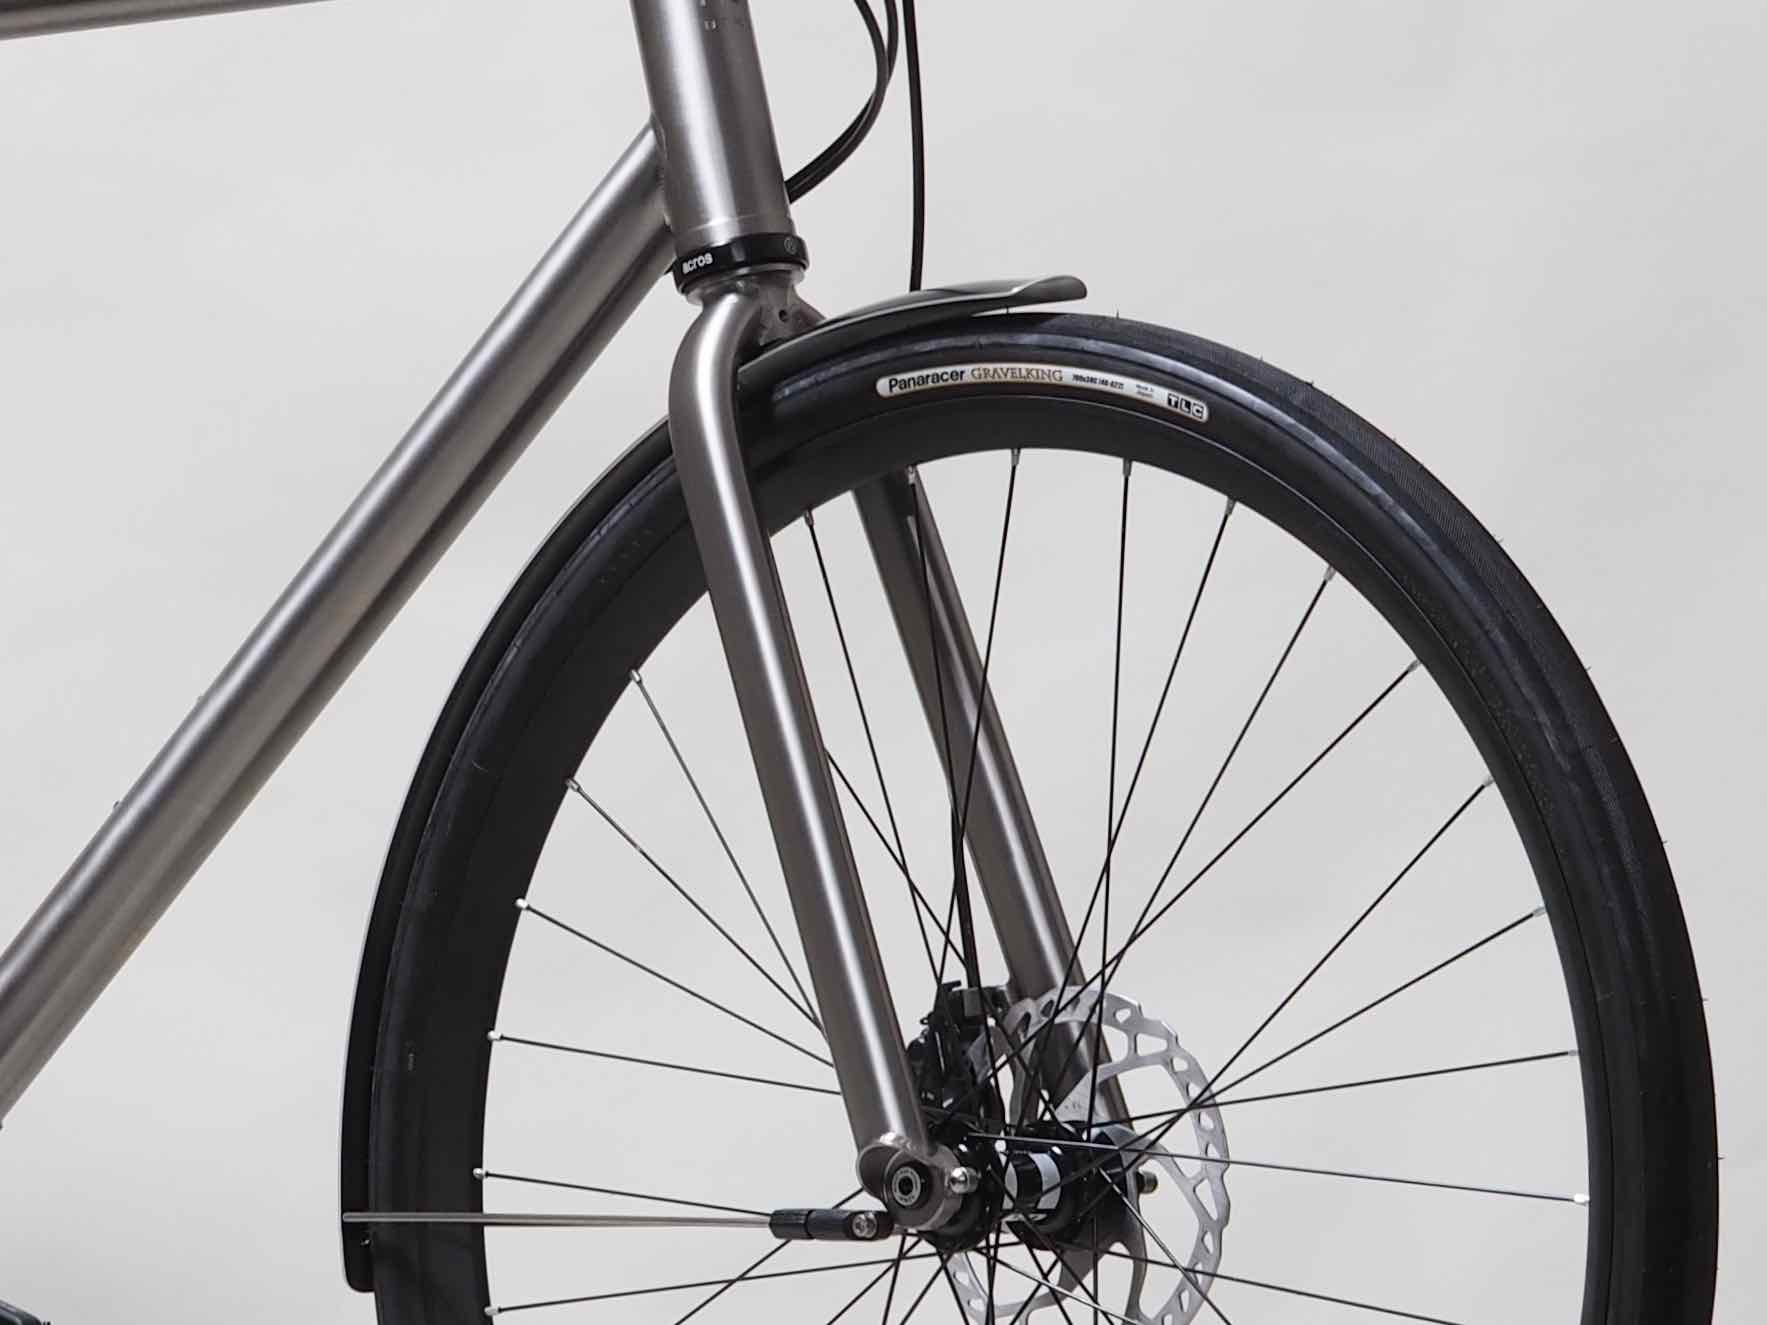 Nua Bikes - - Titanium bikes, frames and components